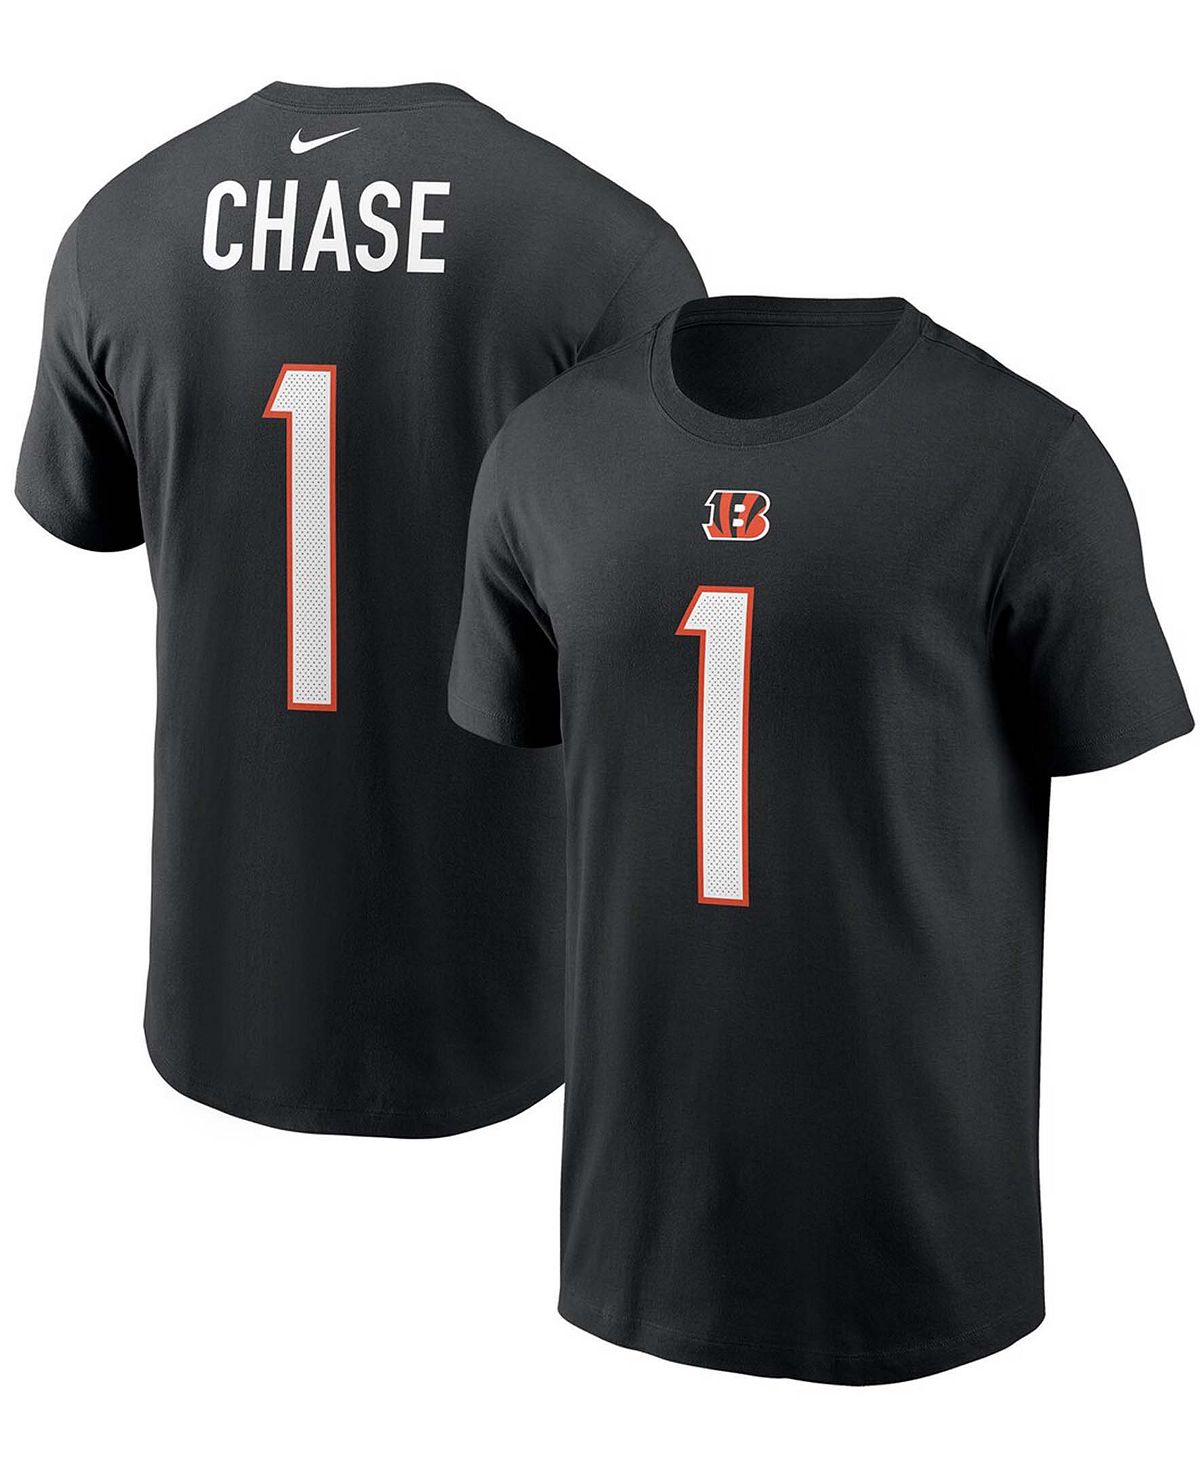 Мужская футболка Ja'Marr Chase Black Cincinnati Bengals с именем и номером игрока первого раунда драфта НФЛ 2021 года Nike chase status chase status more than alot limited colour 2 lp